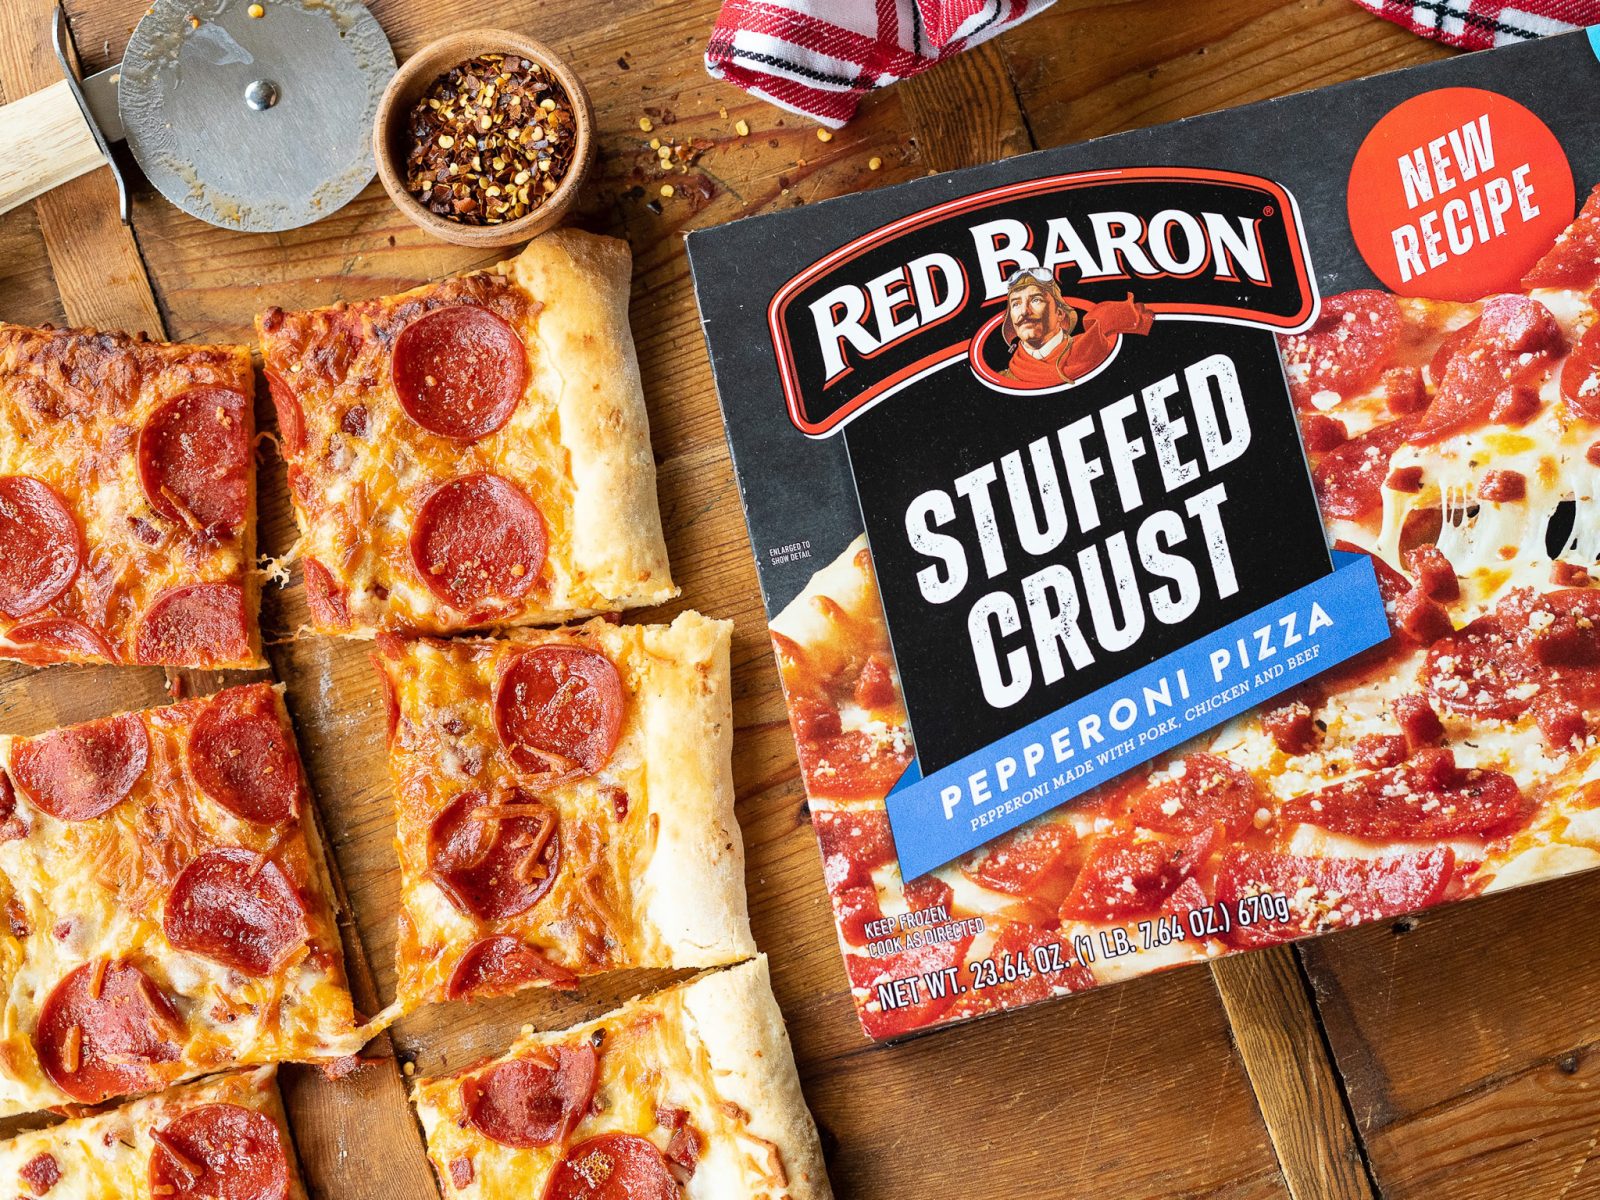 Red Baron Stuffed Crust Pizza Just $4.99 At Kroger